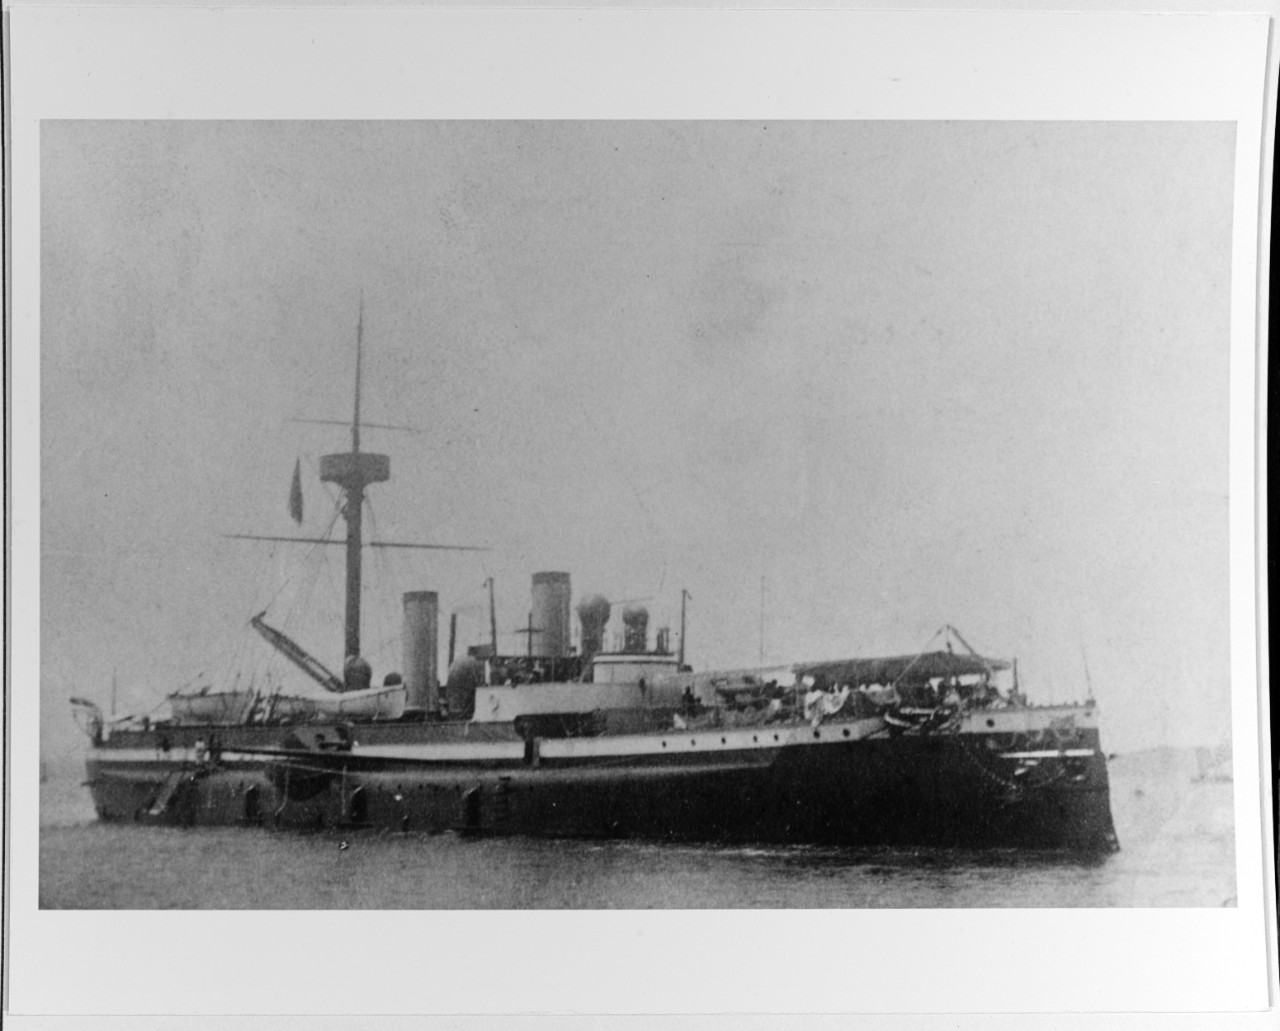 LAI YUEN (Chinese armored cruiser of 1887)